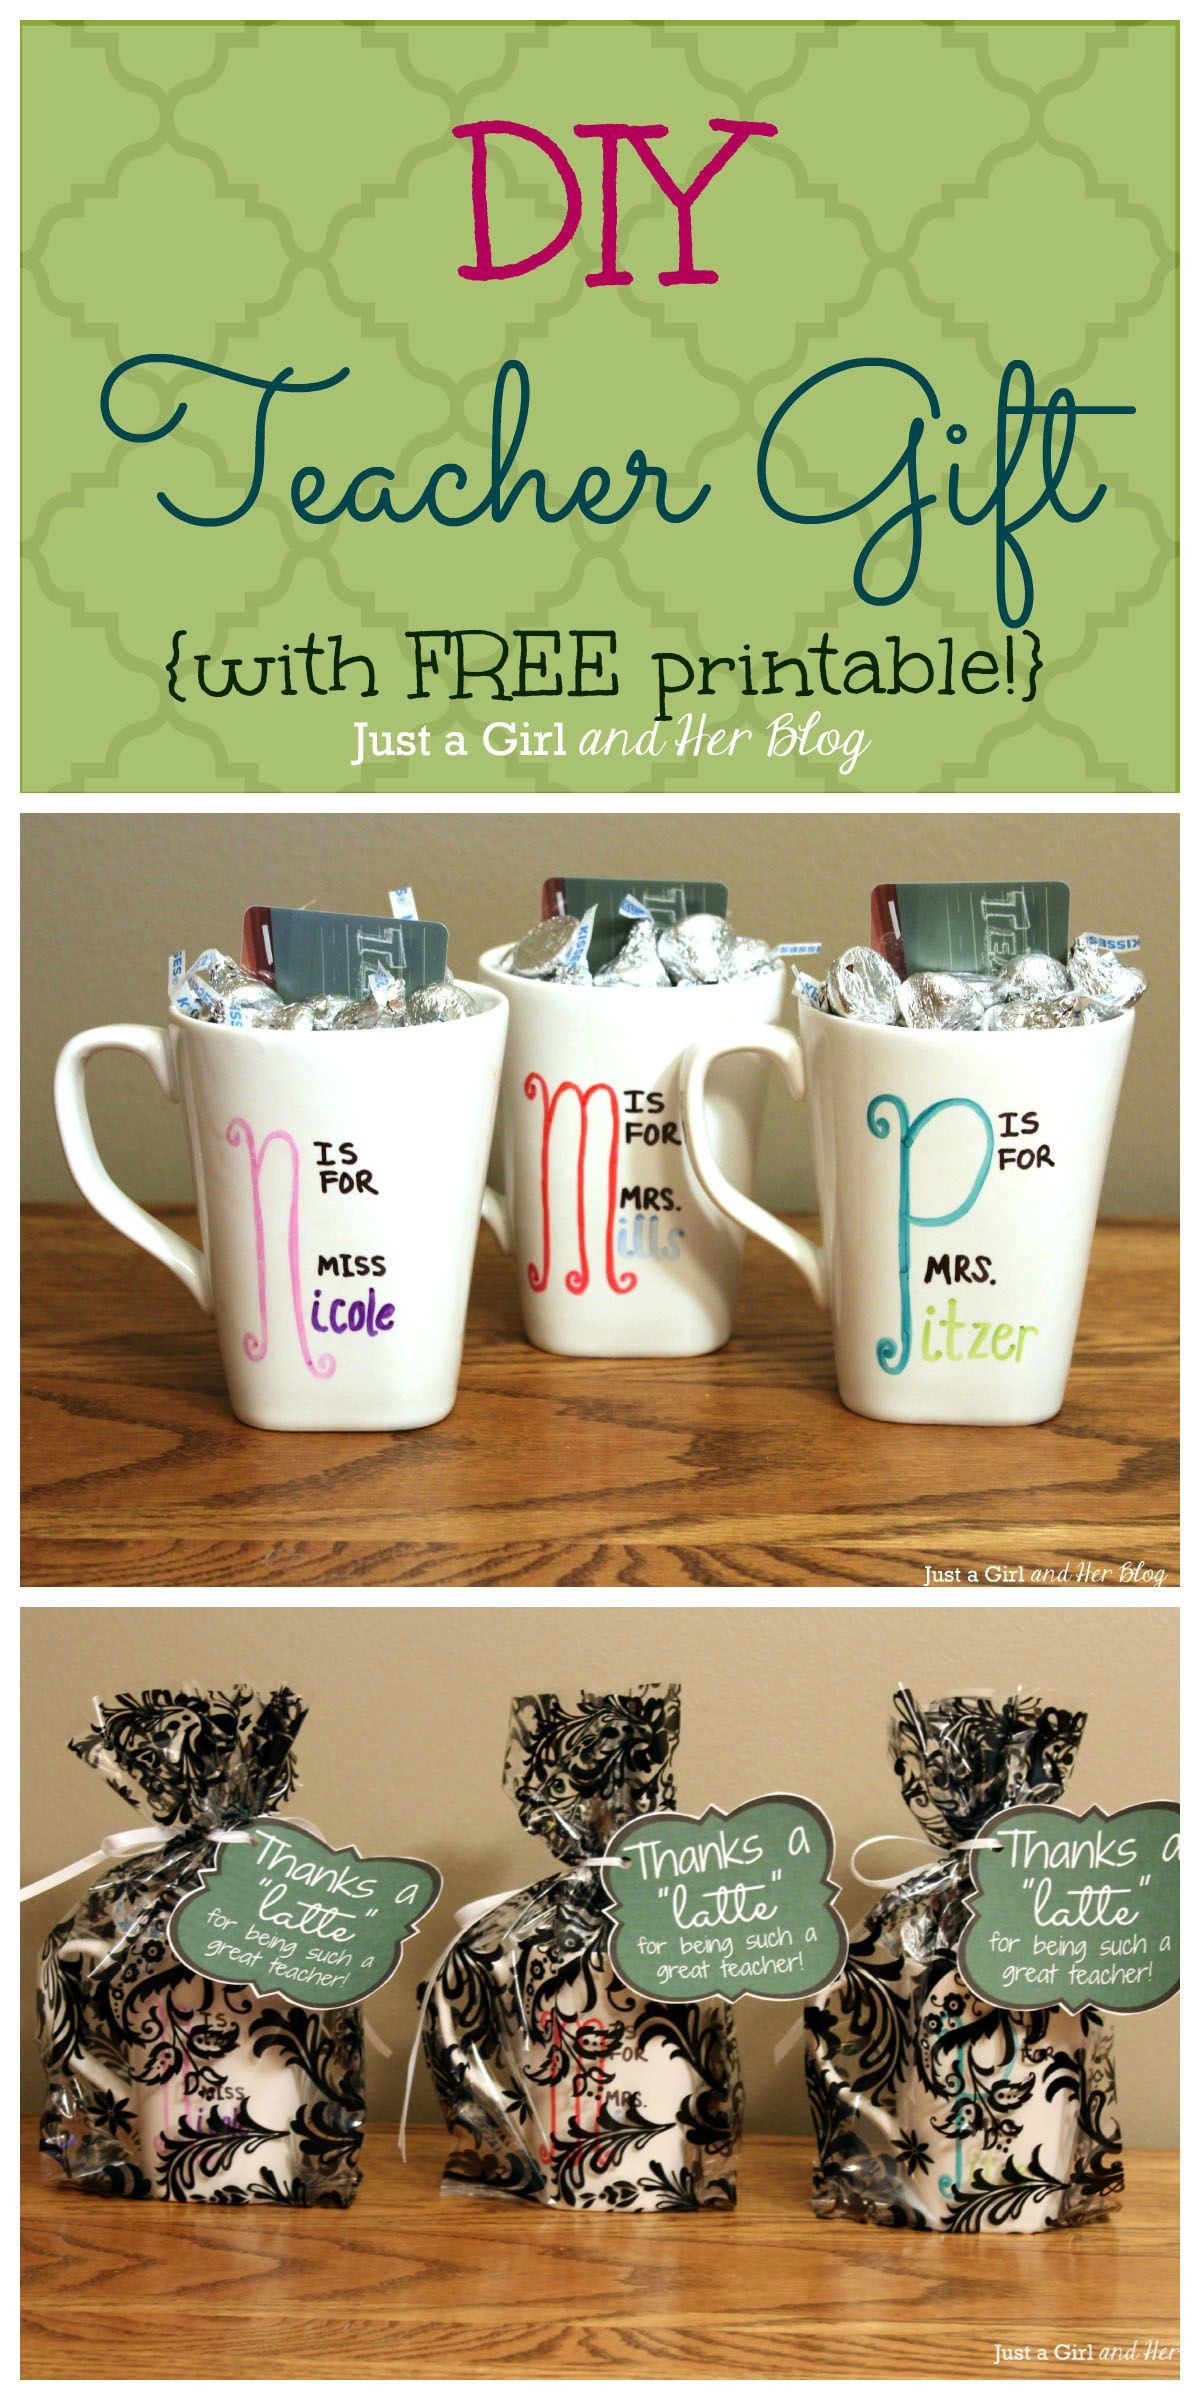 Preschool Teacher Holiday Gift Ideas
 Last Minute Mama DIY Teacher Gift with FREE Printable